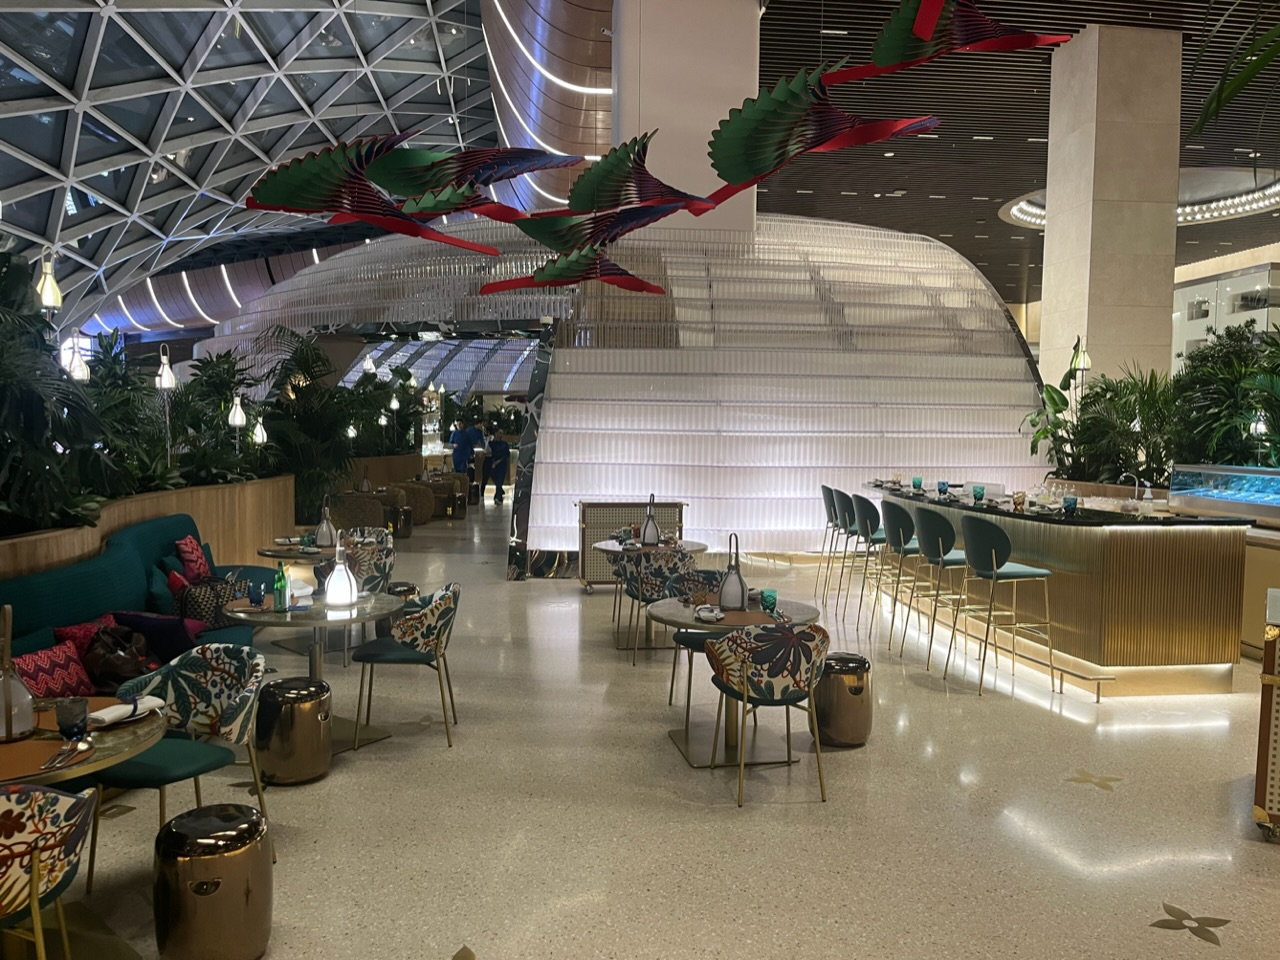 Qatar Airways' Louis Vuitton Lounge Doha Airport (Including Menu